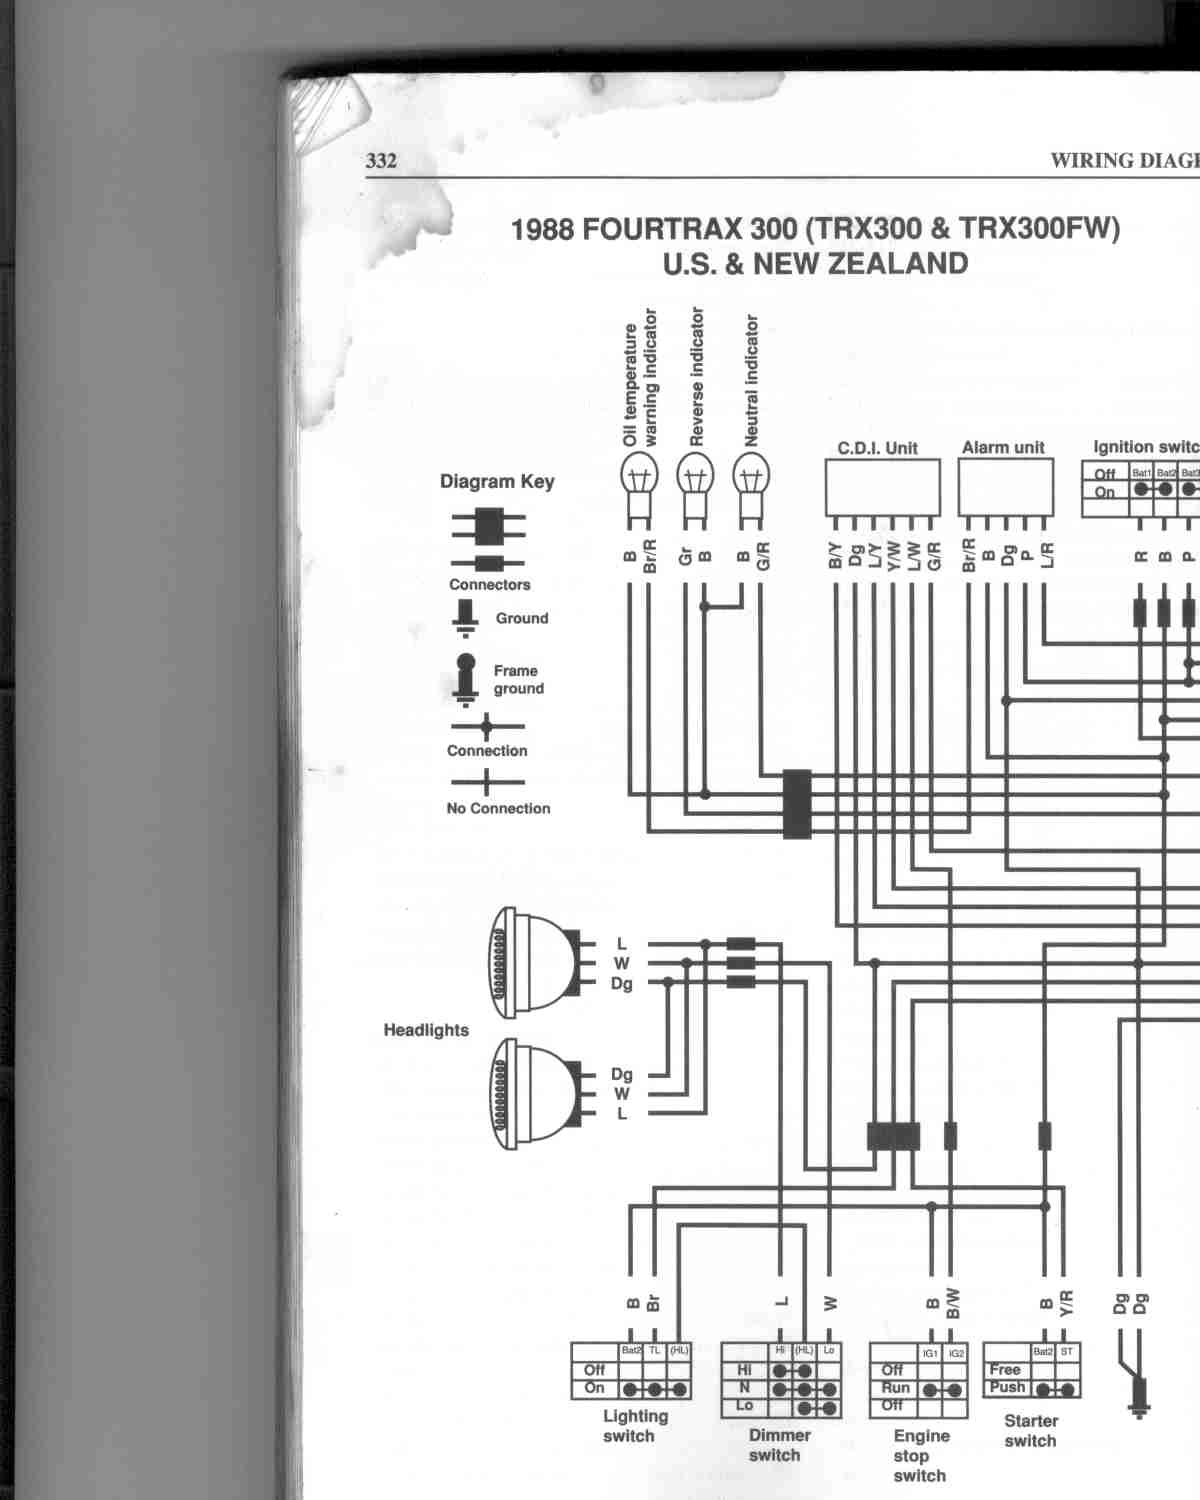 trx300 wiring diagram needed - ATVConnection.com ATV Enthusiast Community